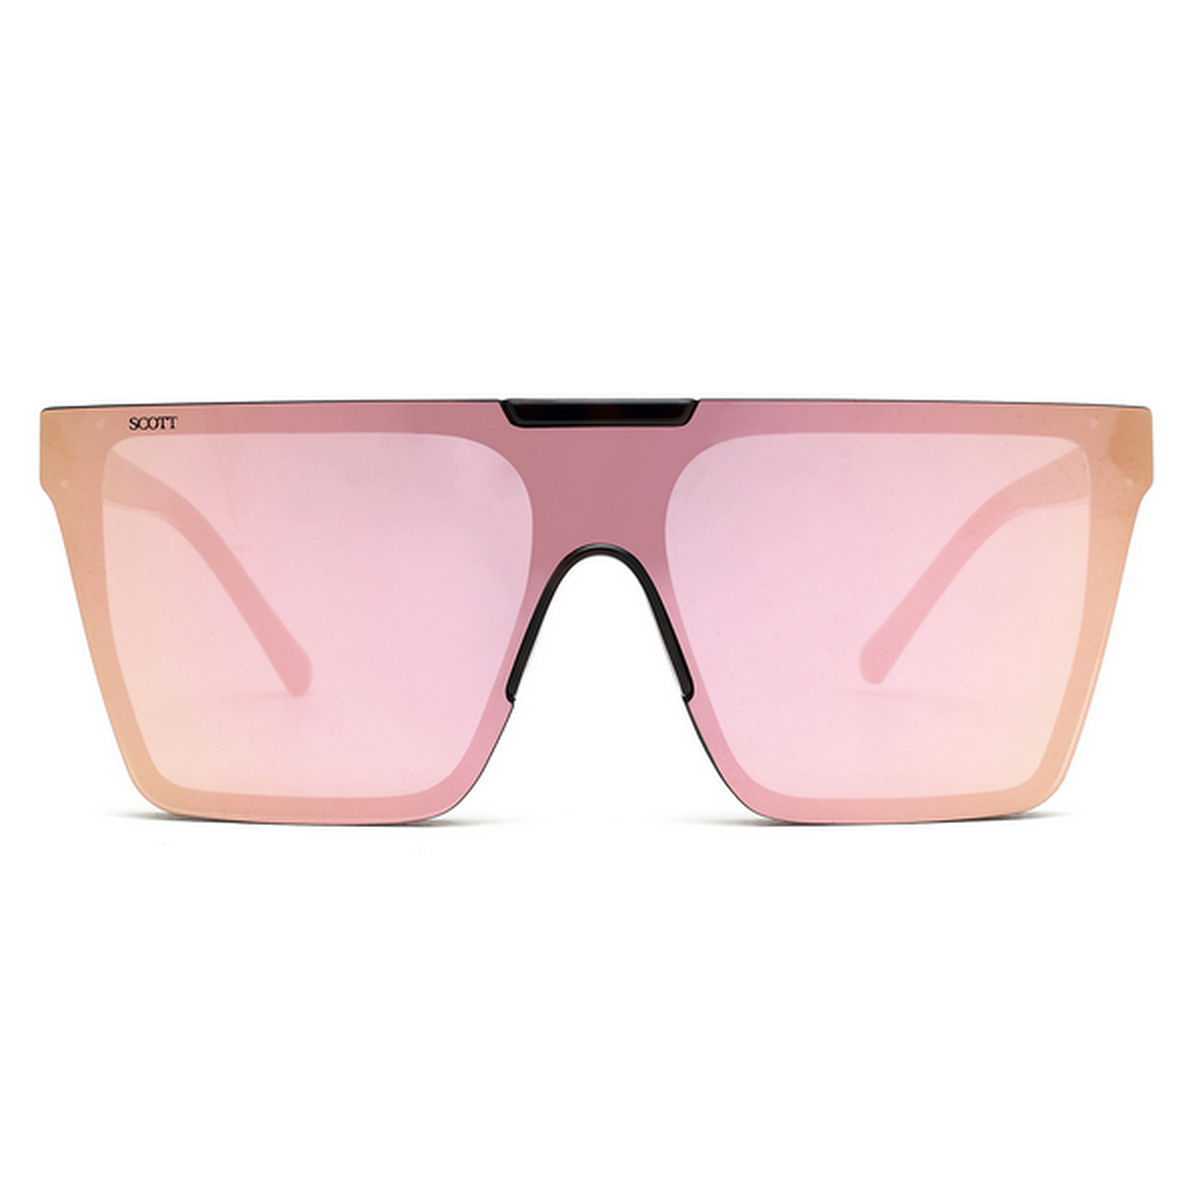 Experience more than 158 scott sunglasses latest